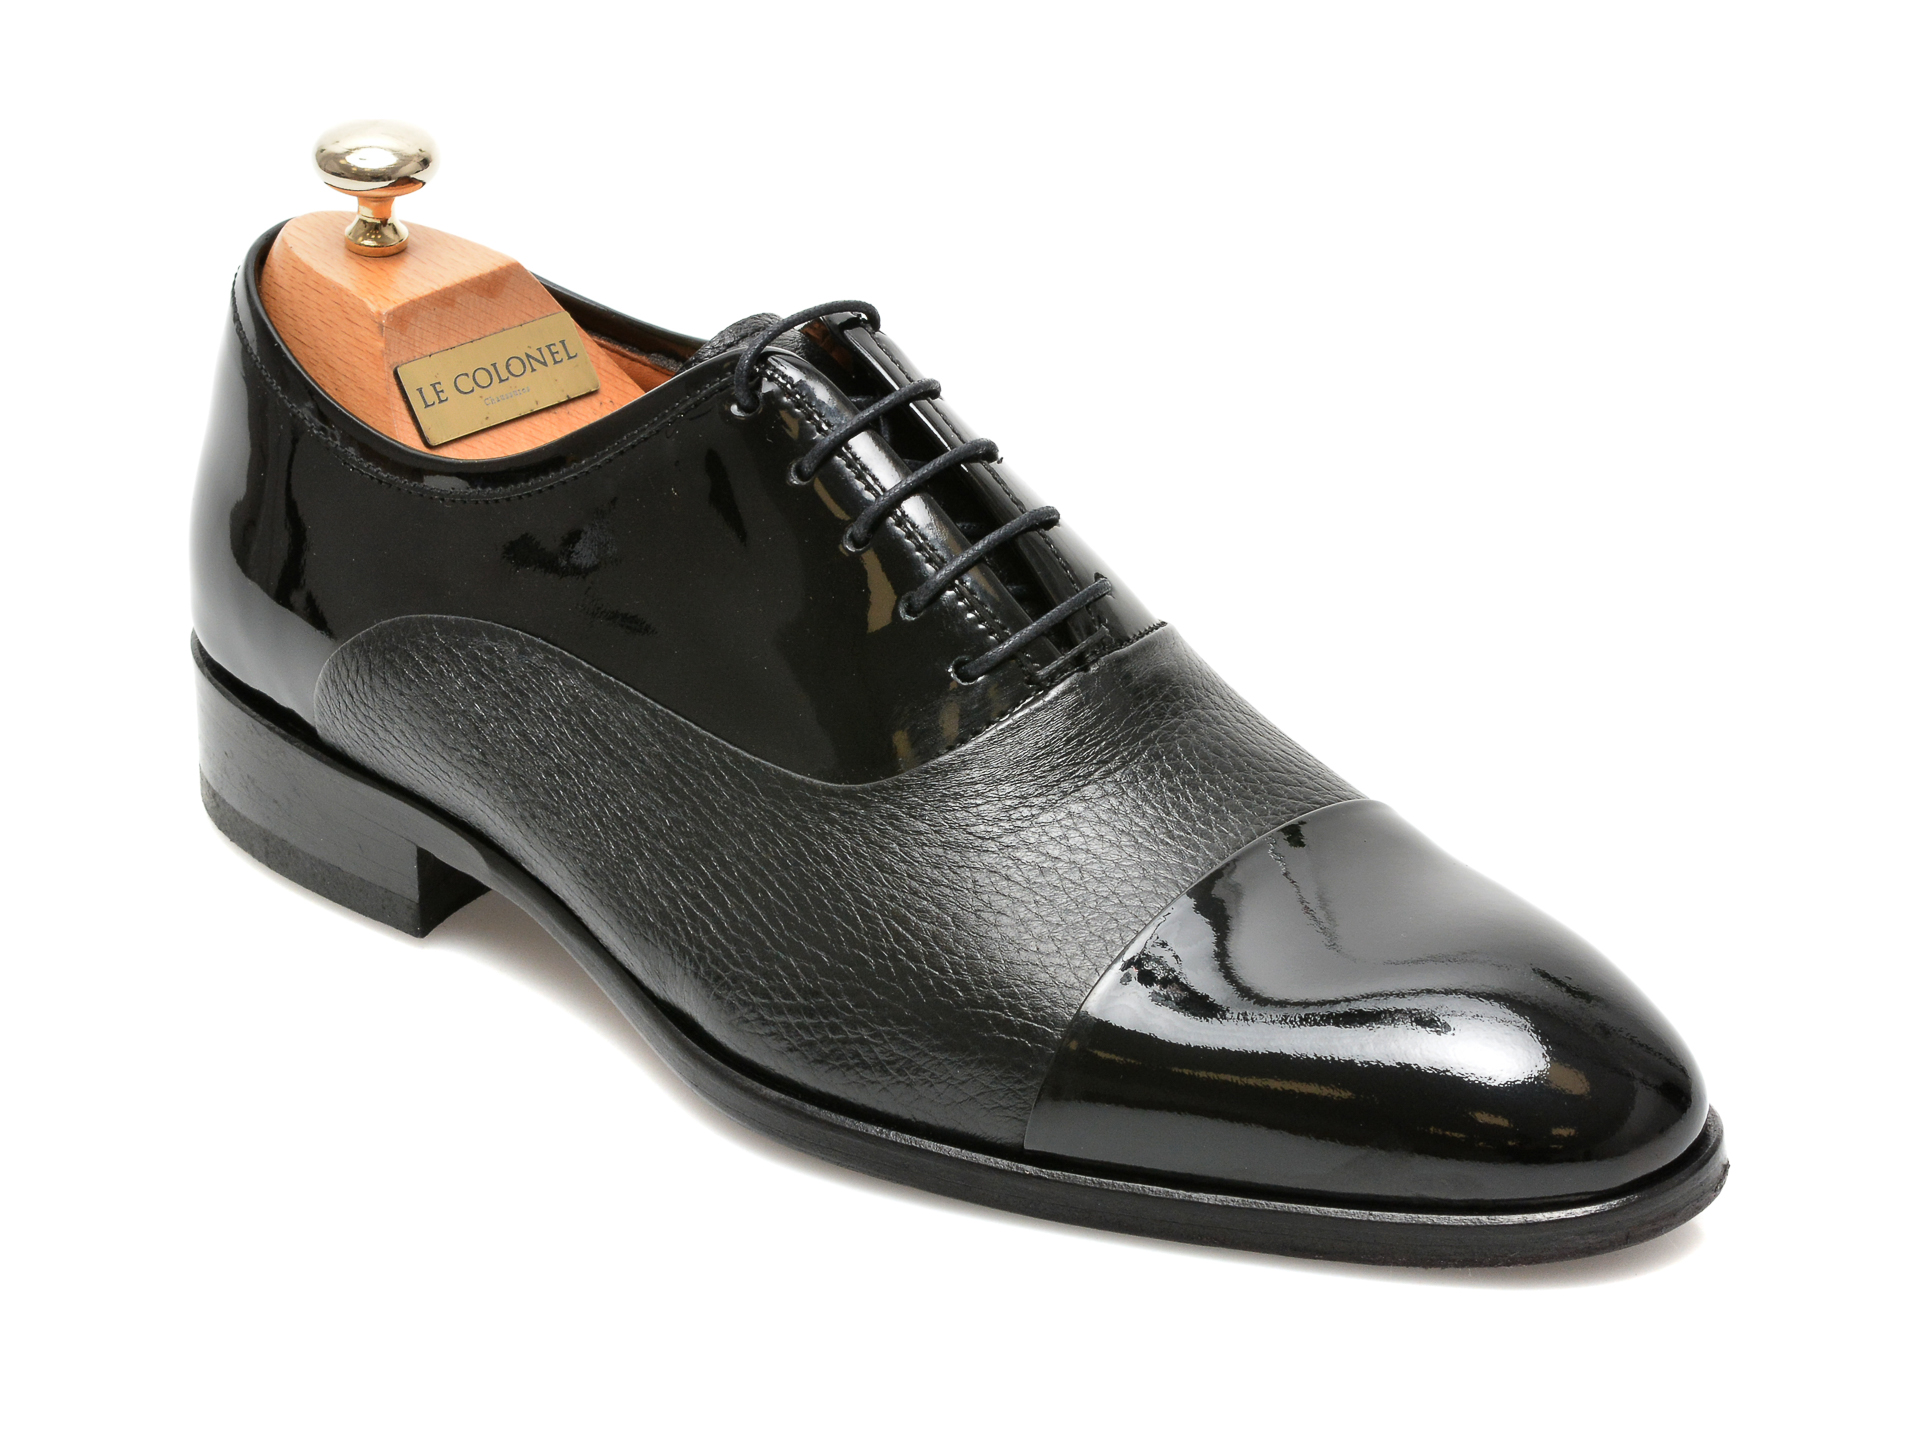 Pantofi LE COLONEL negri, 327117, din piele naturala lacuita